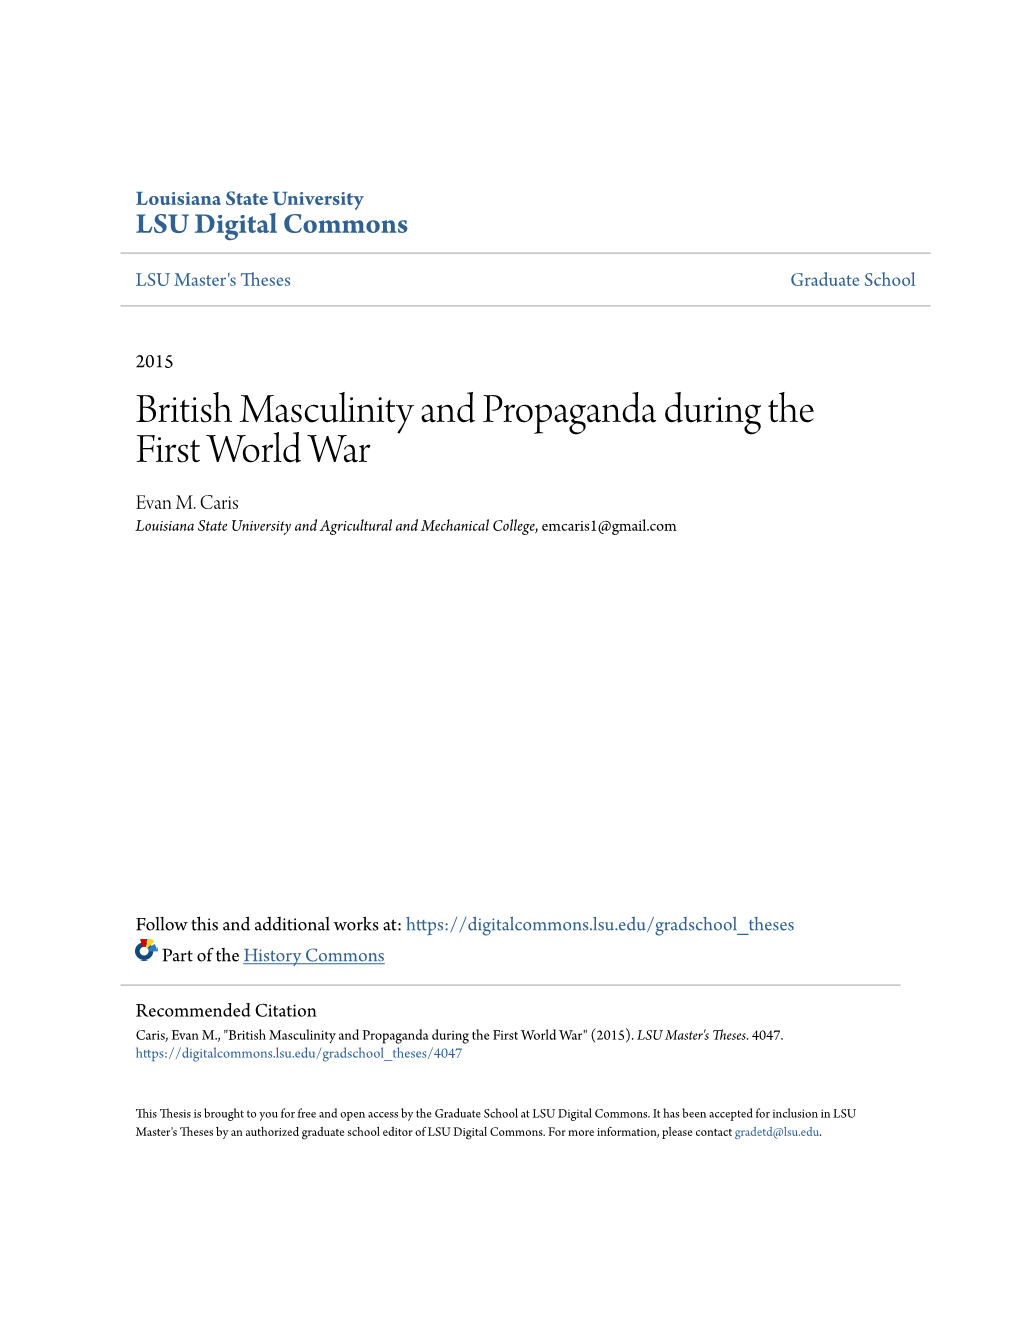 British Masculinity and Propaganda During the First World War Evan M